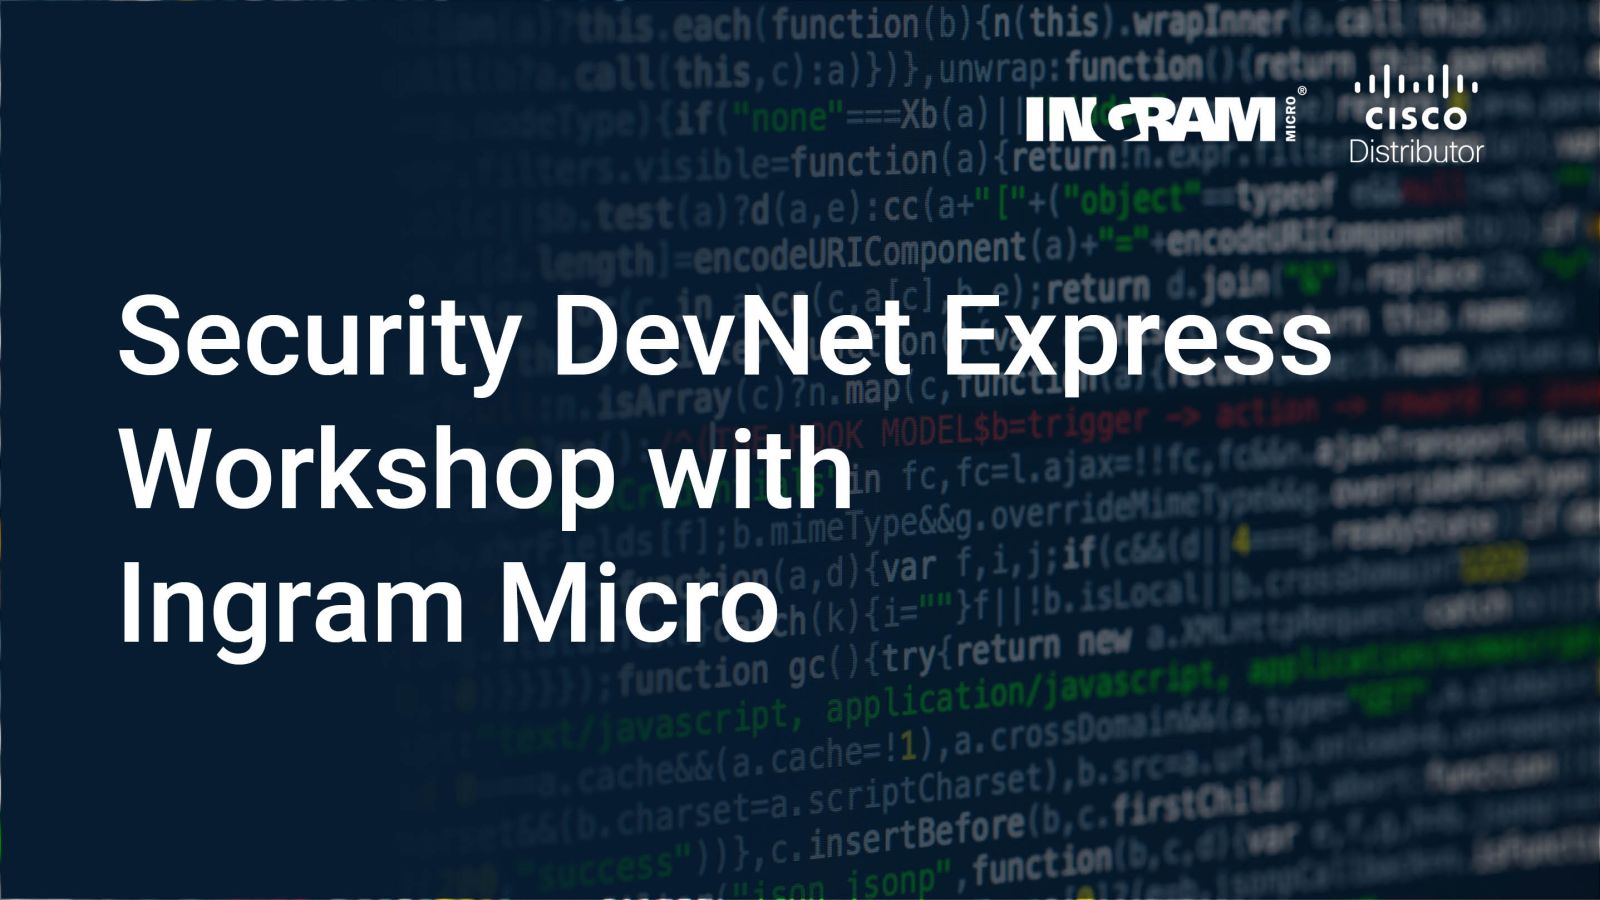 Security DevNet Express Workshop Featured Image